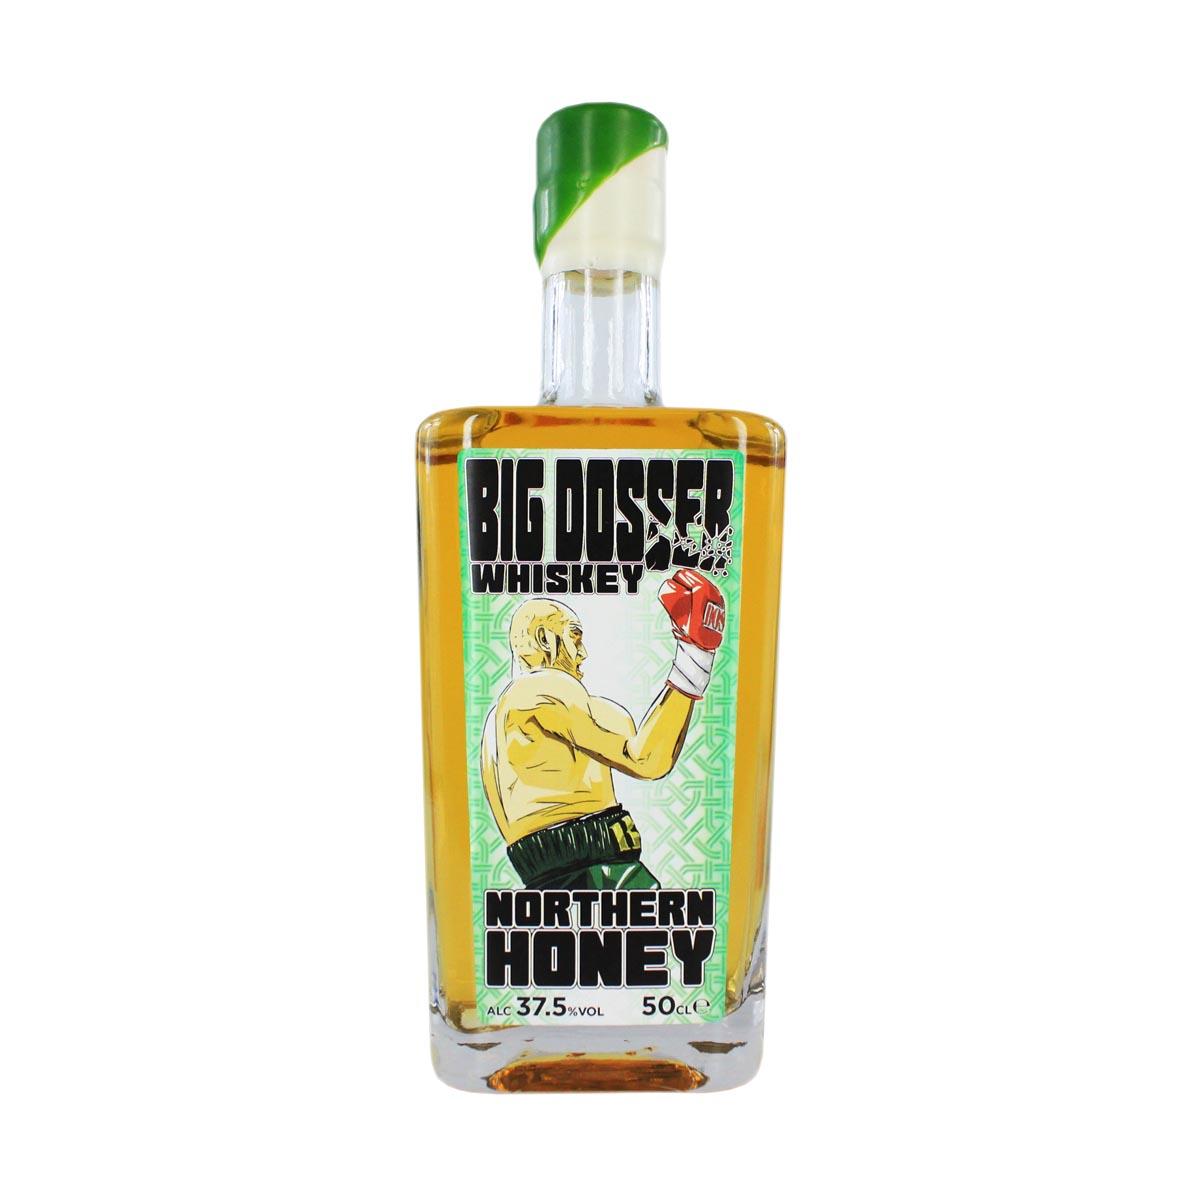 Big Dosser Northern Honey Whiskey 50cl